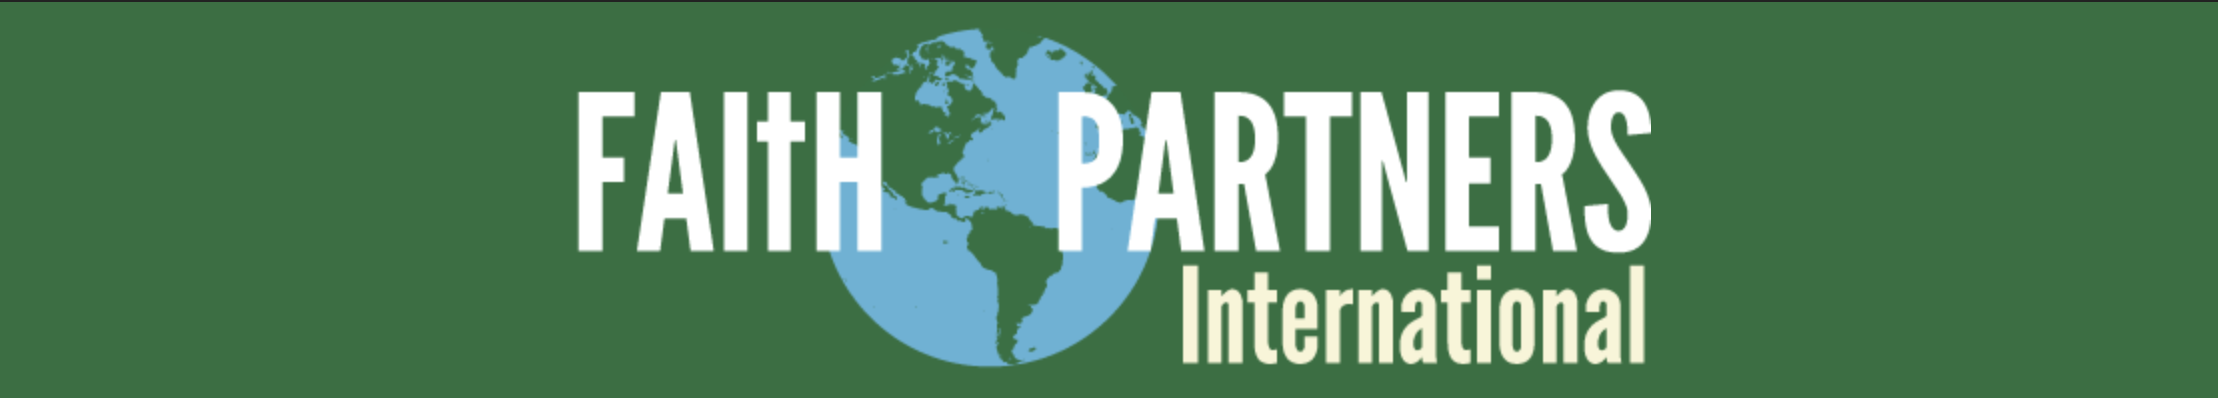 Faith Partners International logo banner